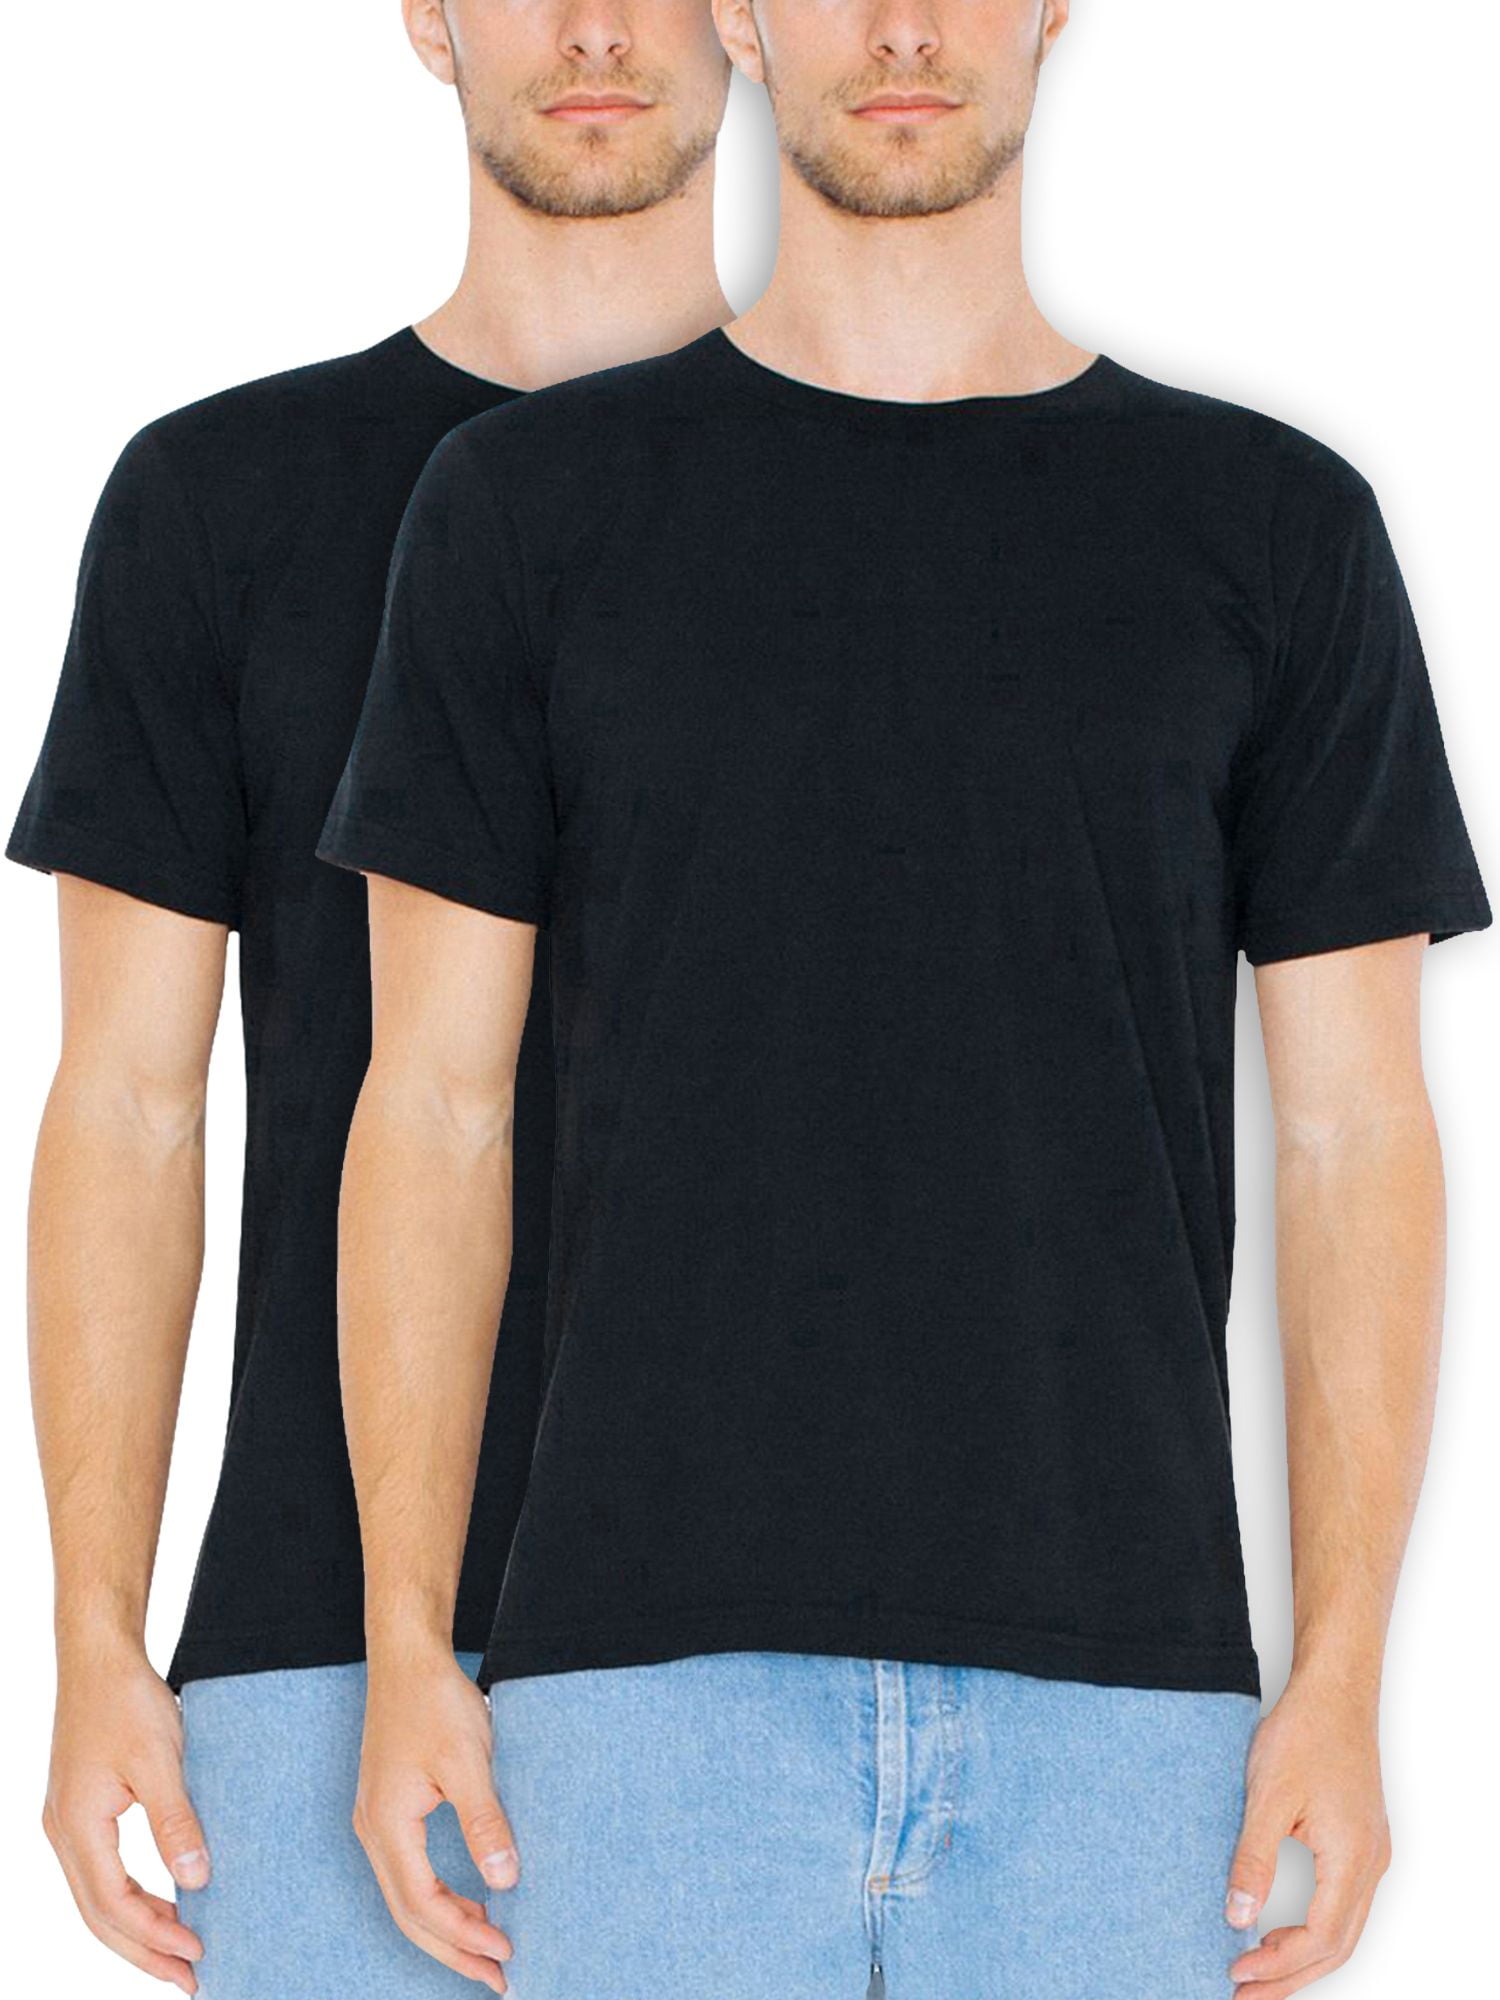 American Apparel Men's & Big Men's Fine Jersey Crewneck T-Shirts, 2-Pack,  Sizes XS-3XL